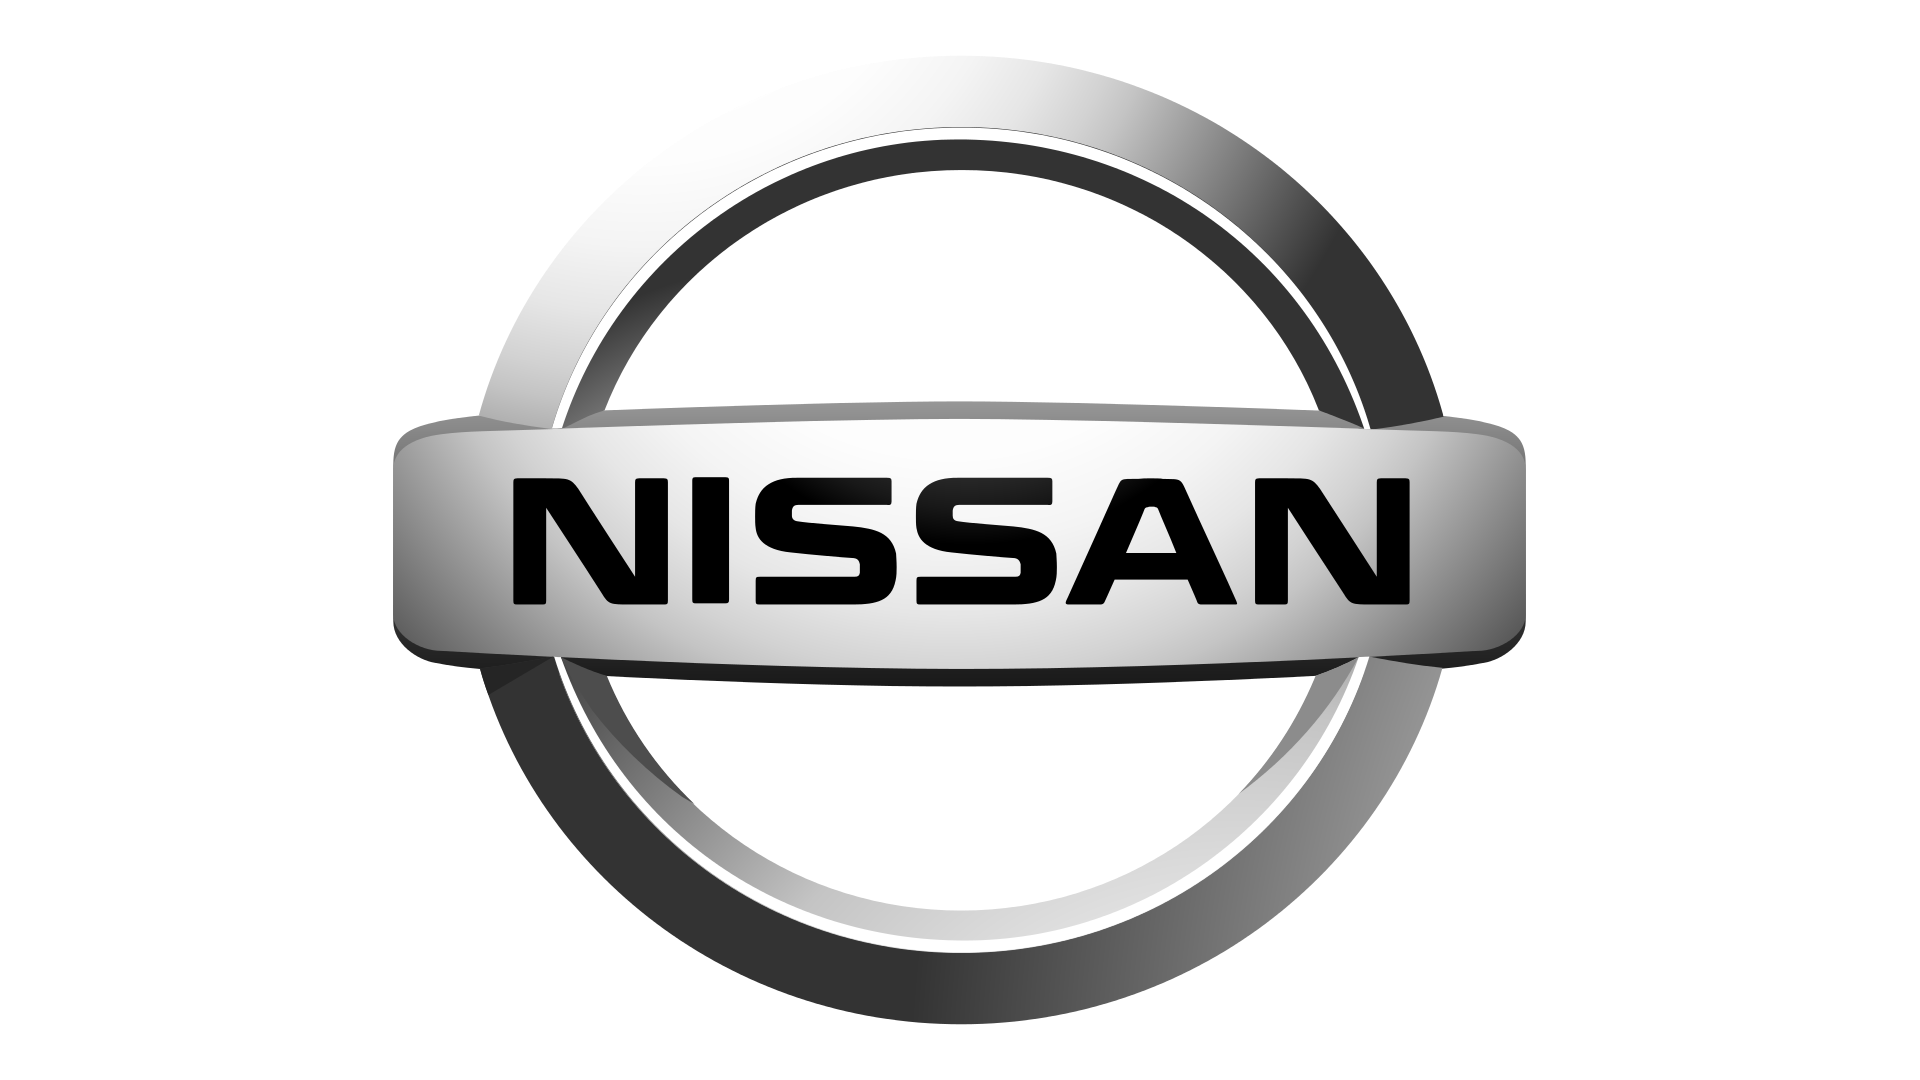 Nissan Logo Png Image | Nissa